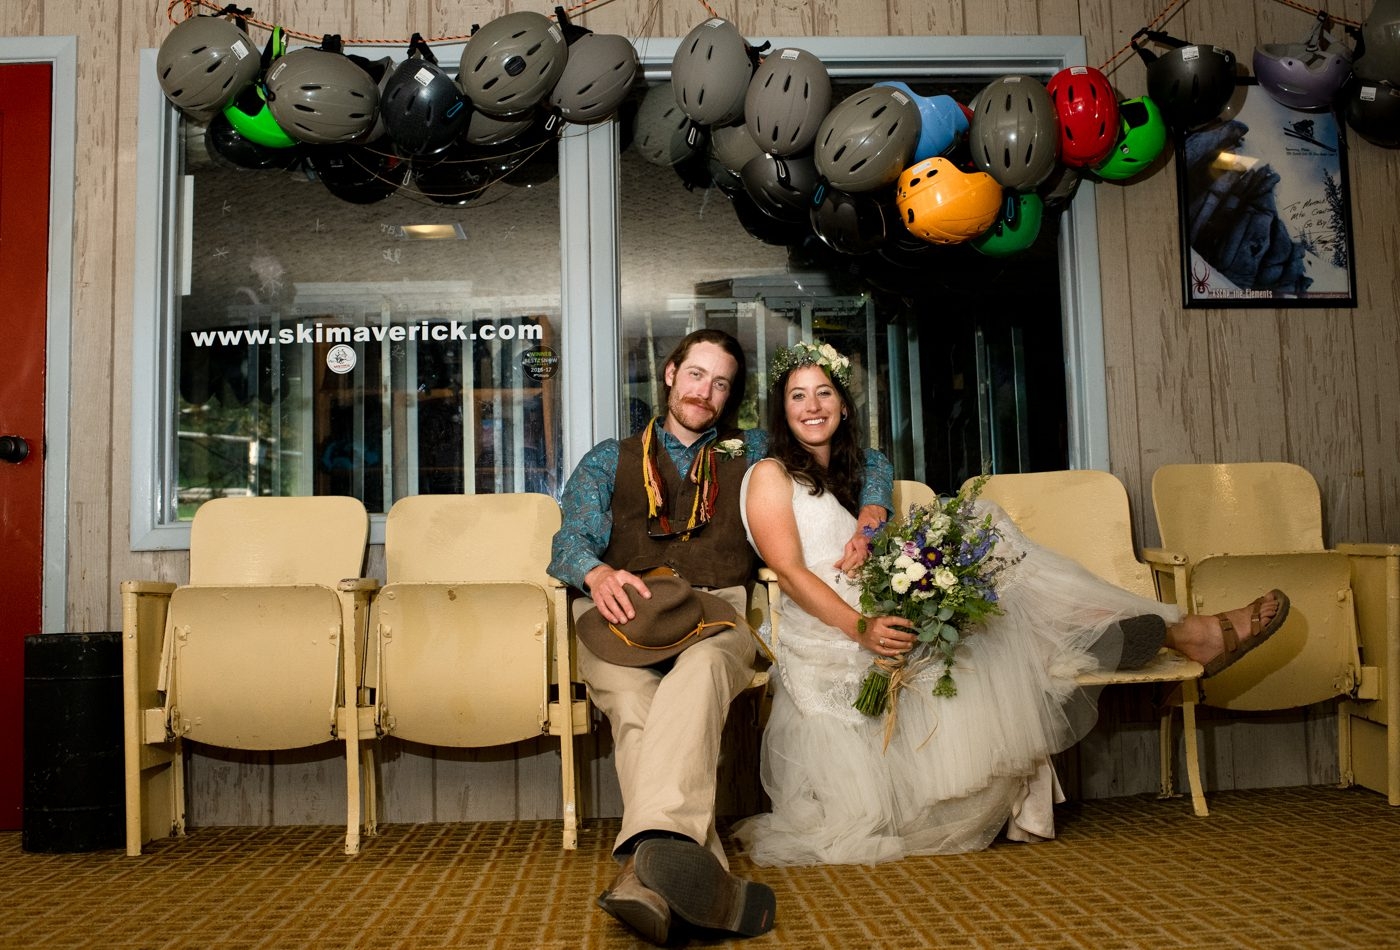 helmuts-in-ski-shop-wedding-couple-portrait